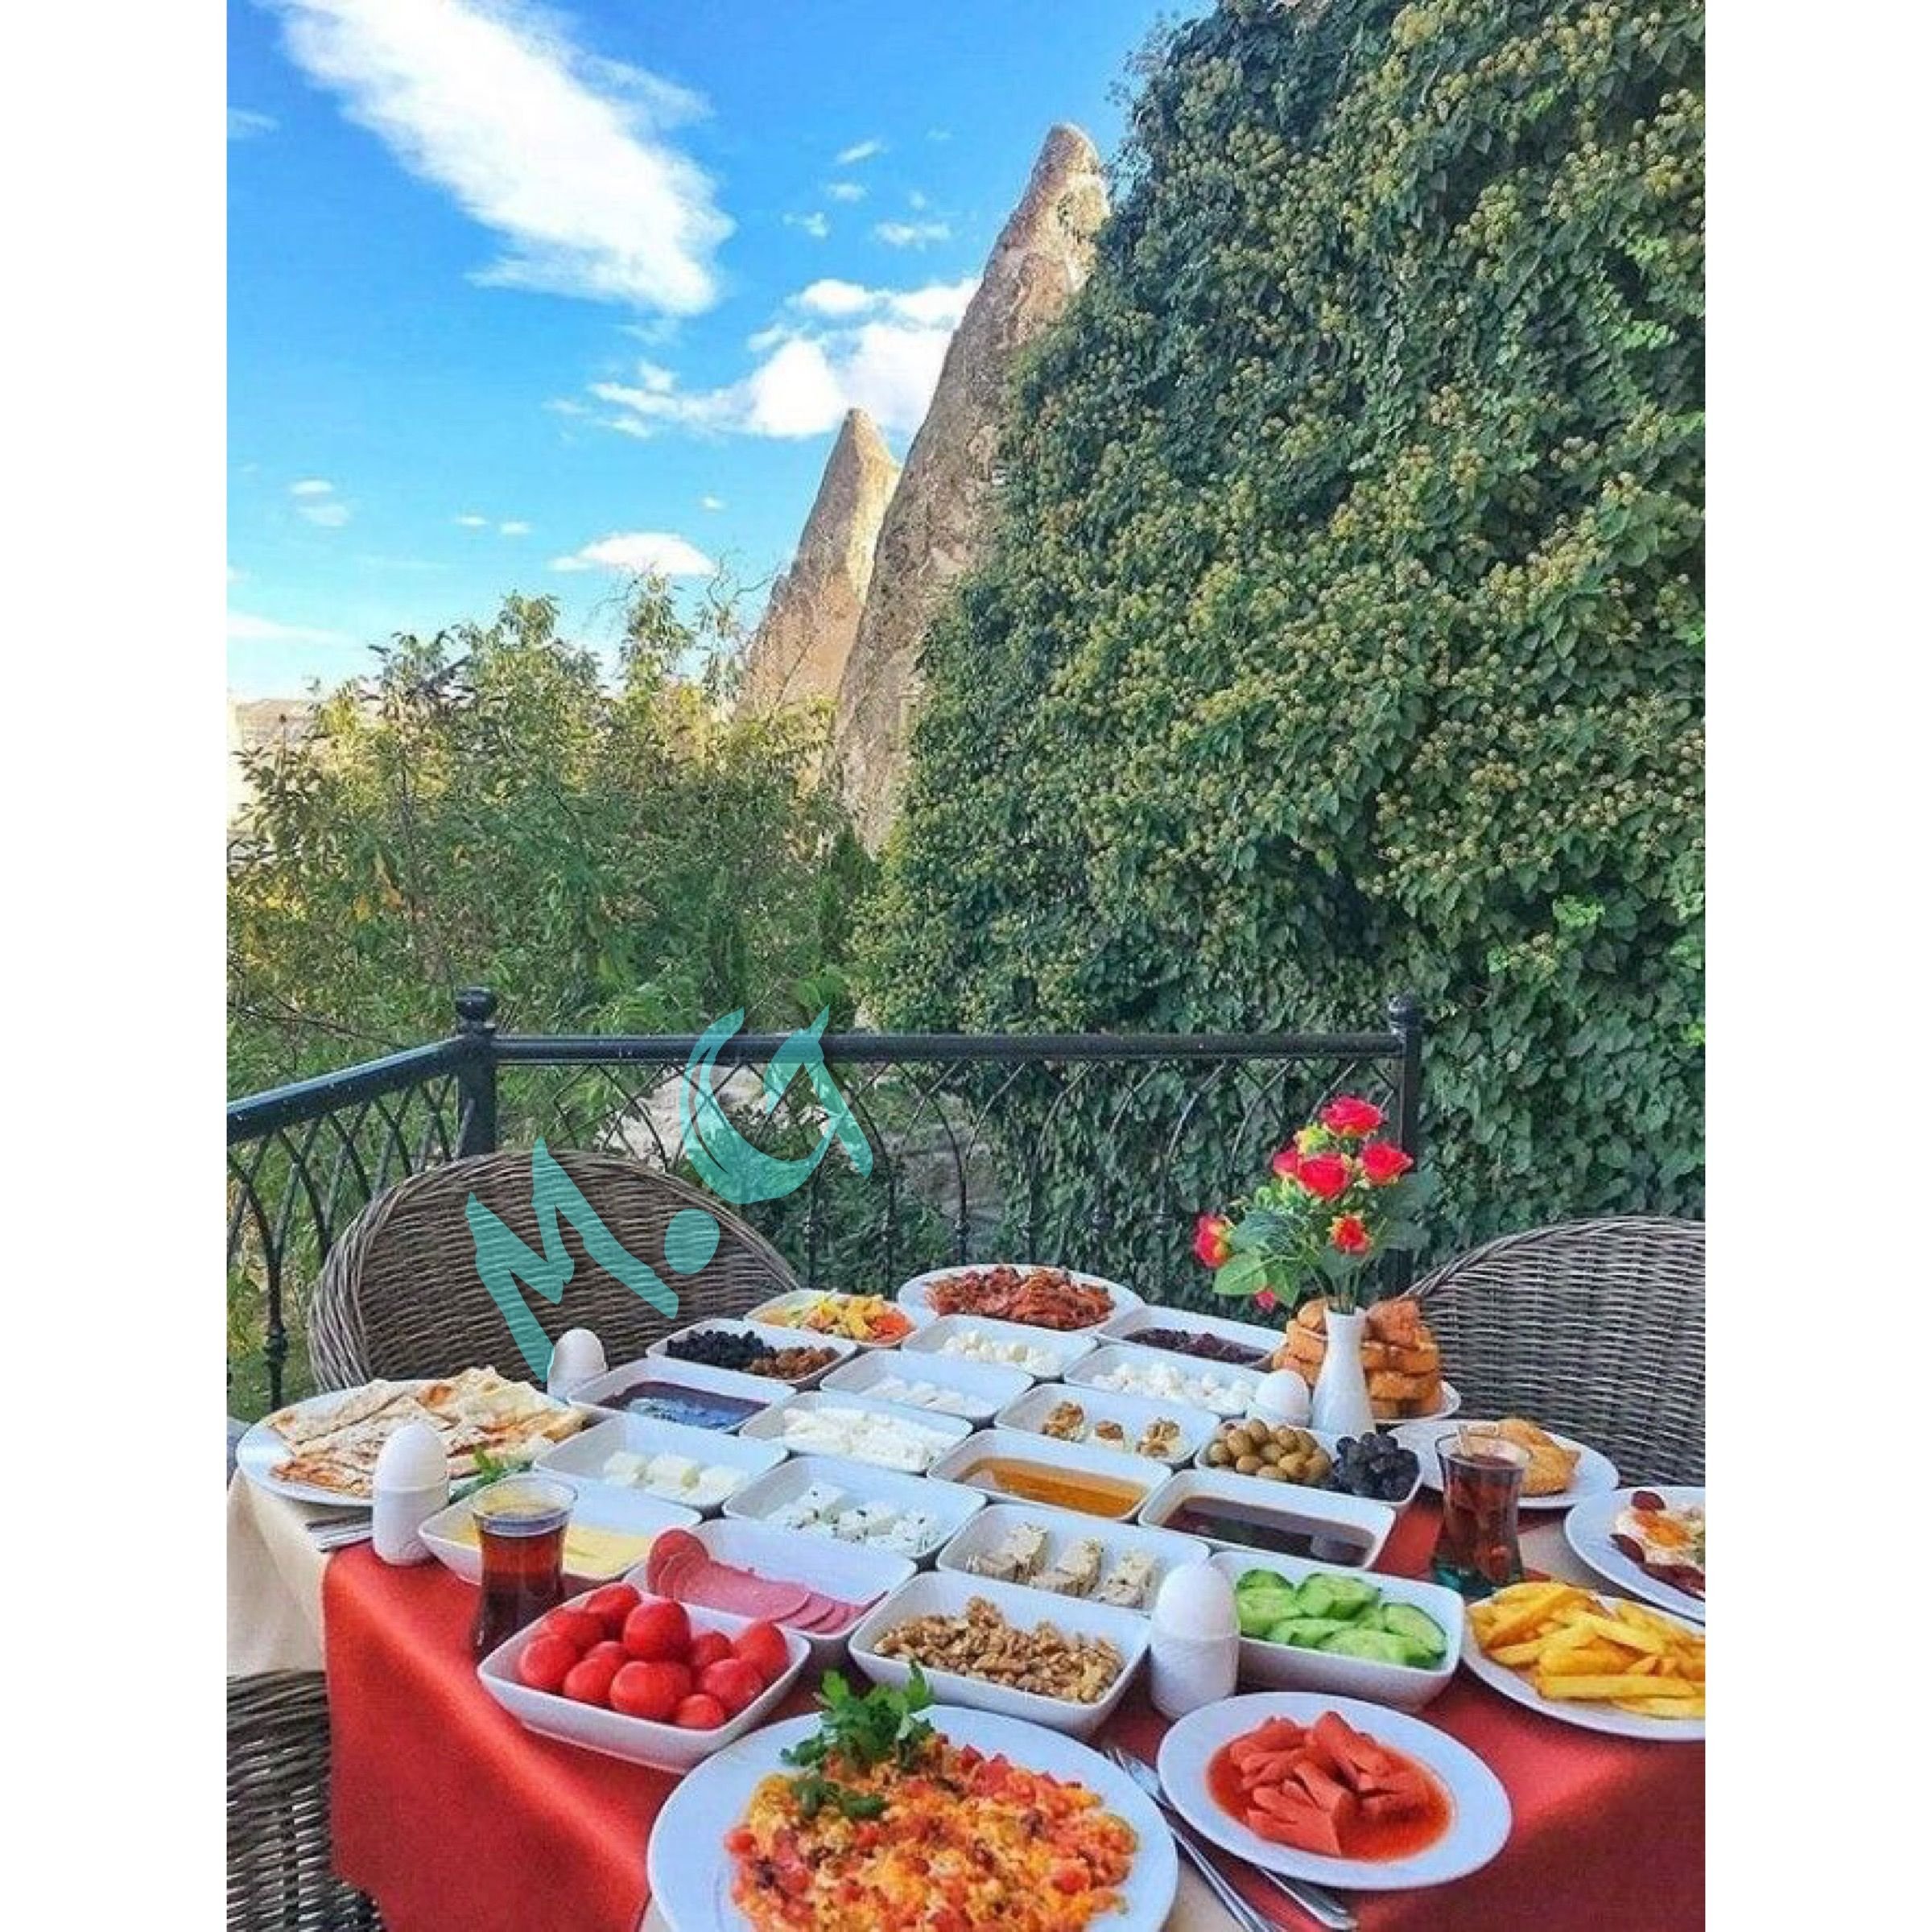 Тревел фуд. Завтрак на свежем воздухе. Завтрак на природе. Азербайджанский завтрак. Красивый завтрак на природе.